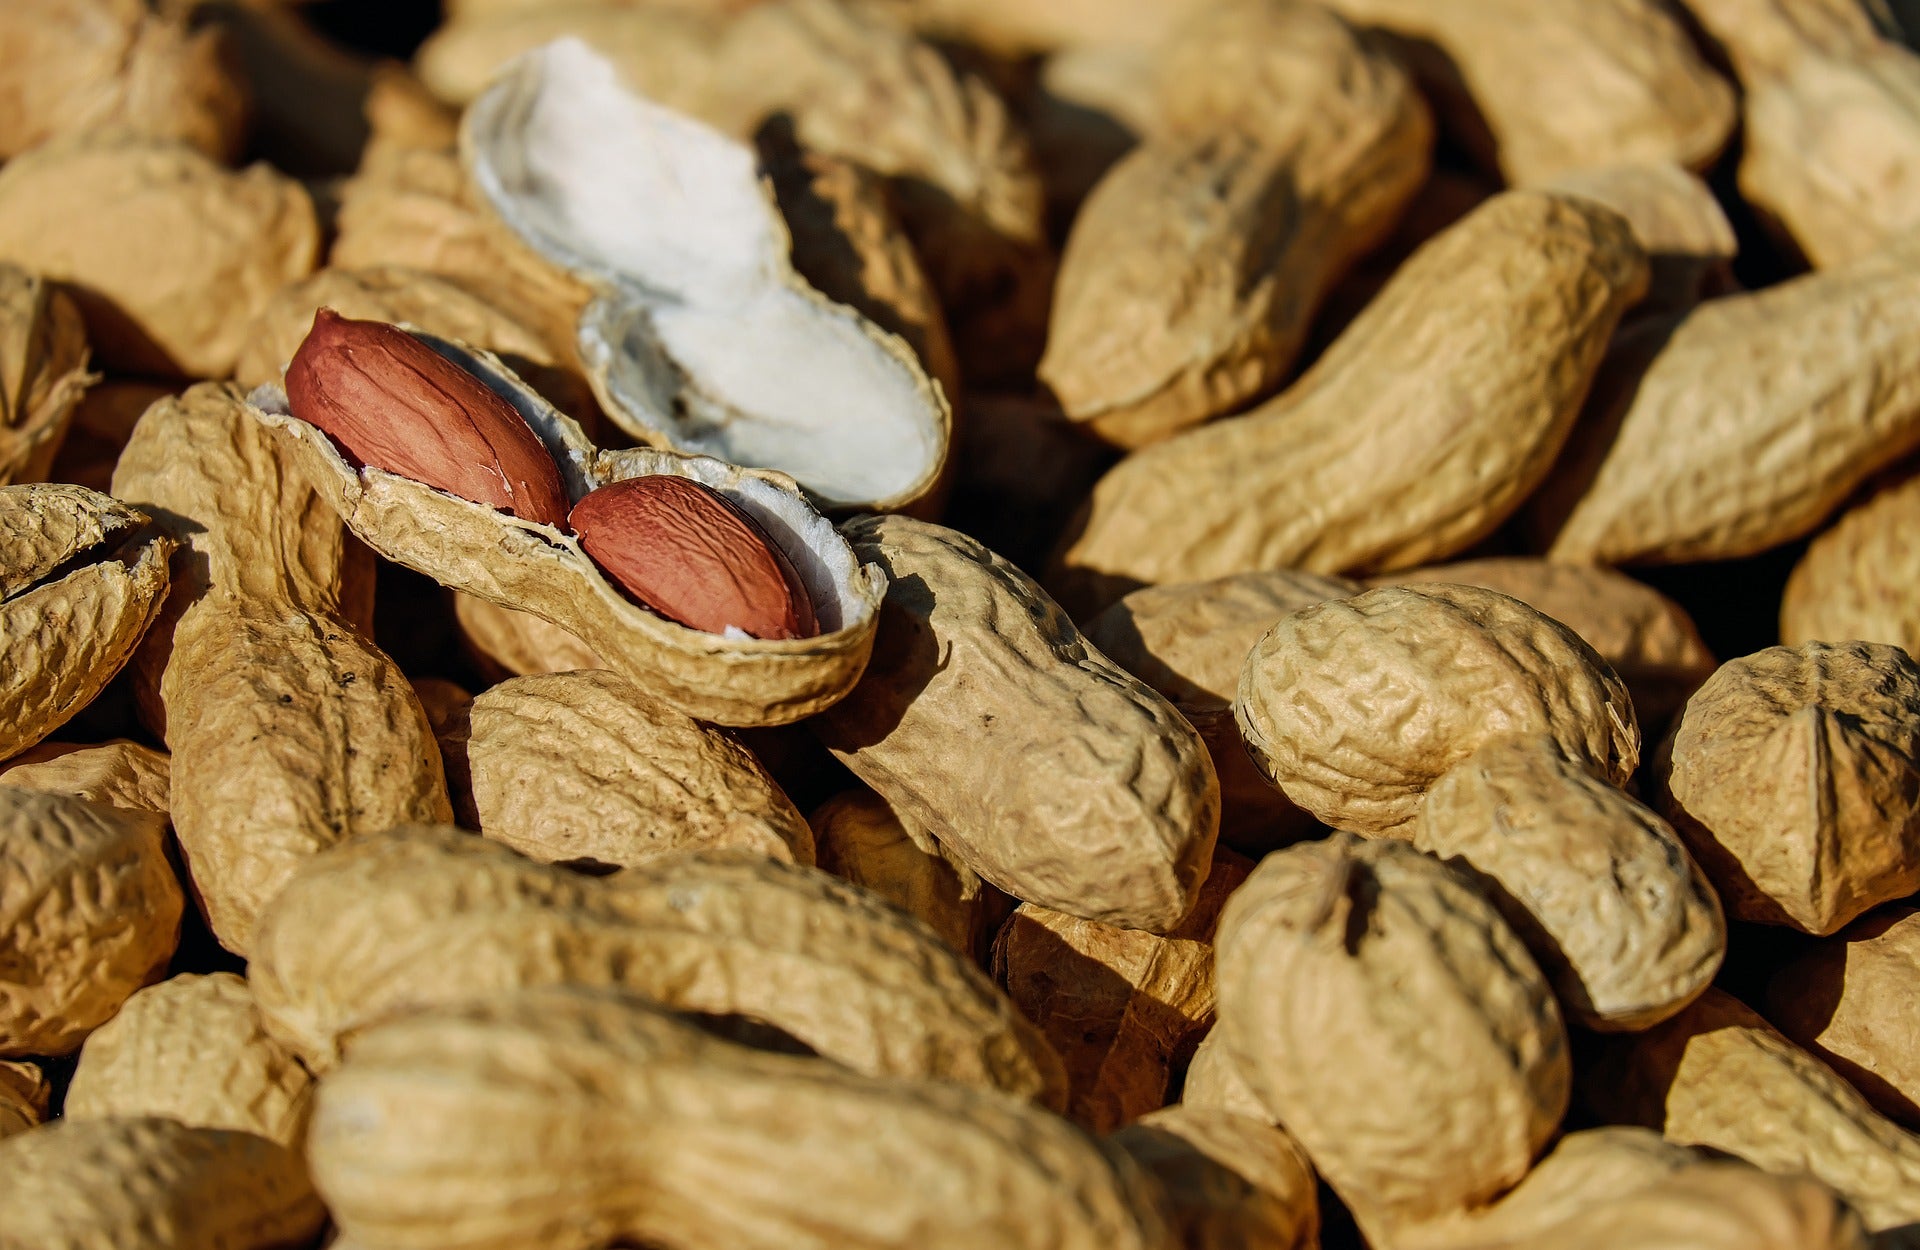 DBV Resubmits Regulatory Application For Peanut Allergy Drug, Stock Rallies